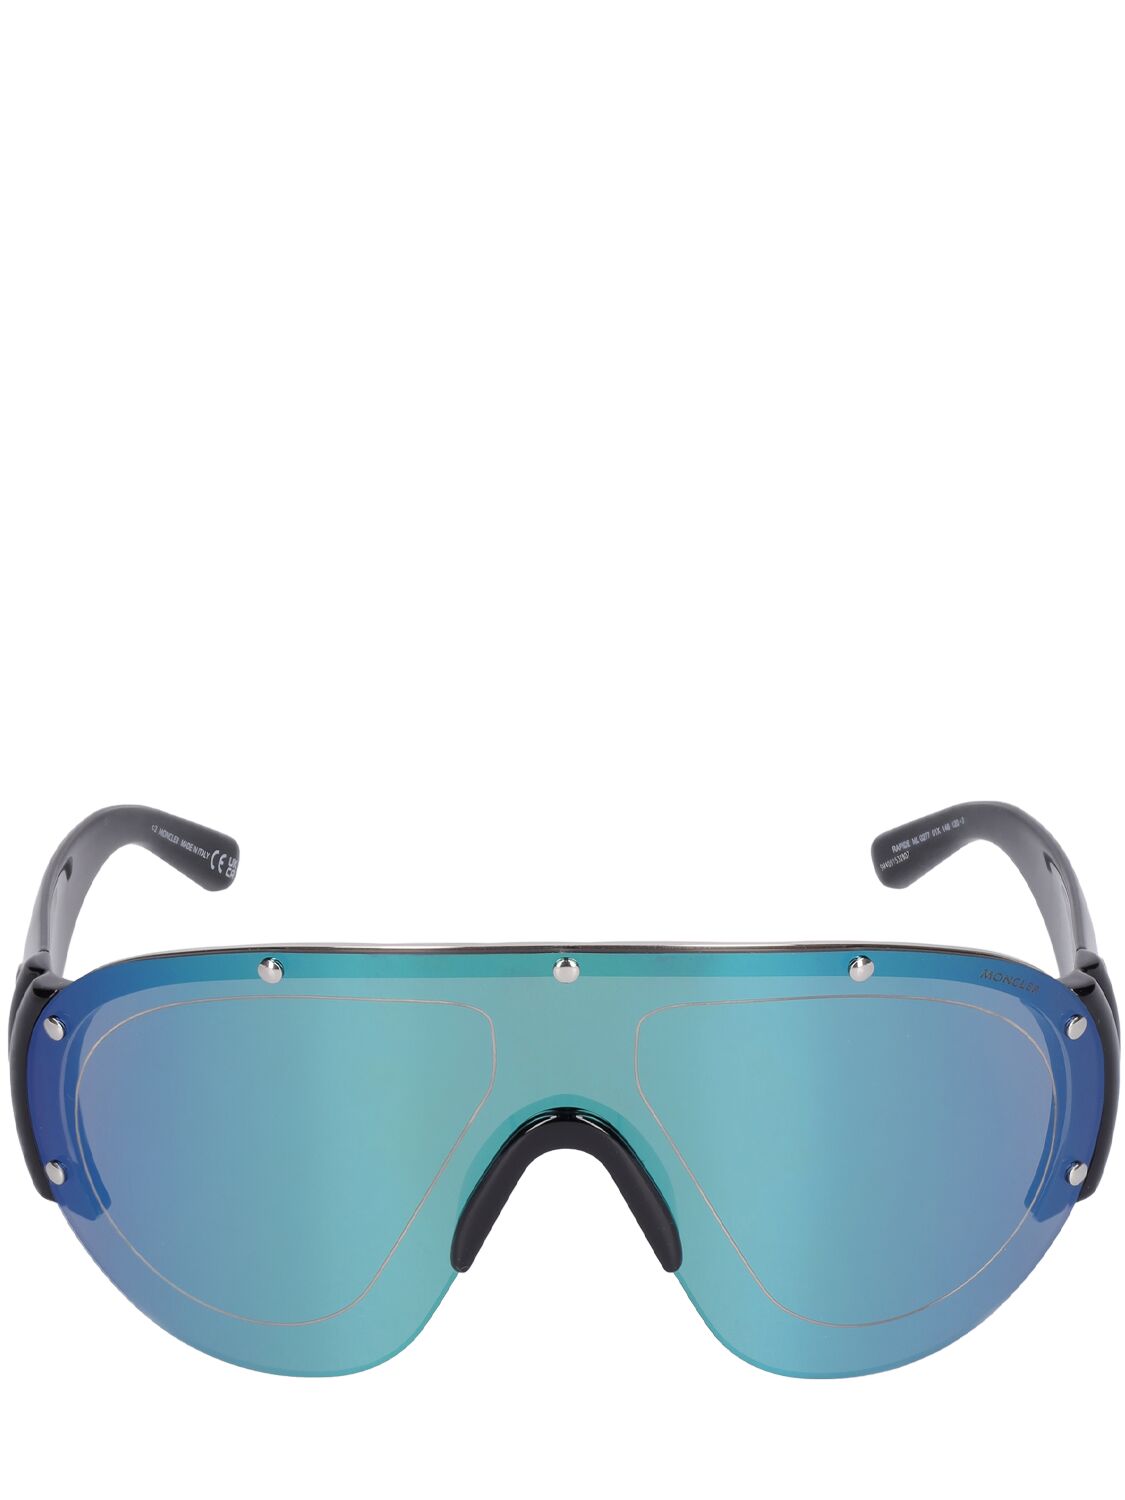 Image of Rapide Shield Sunglasses